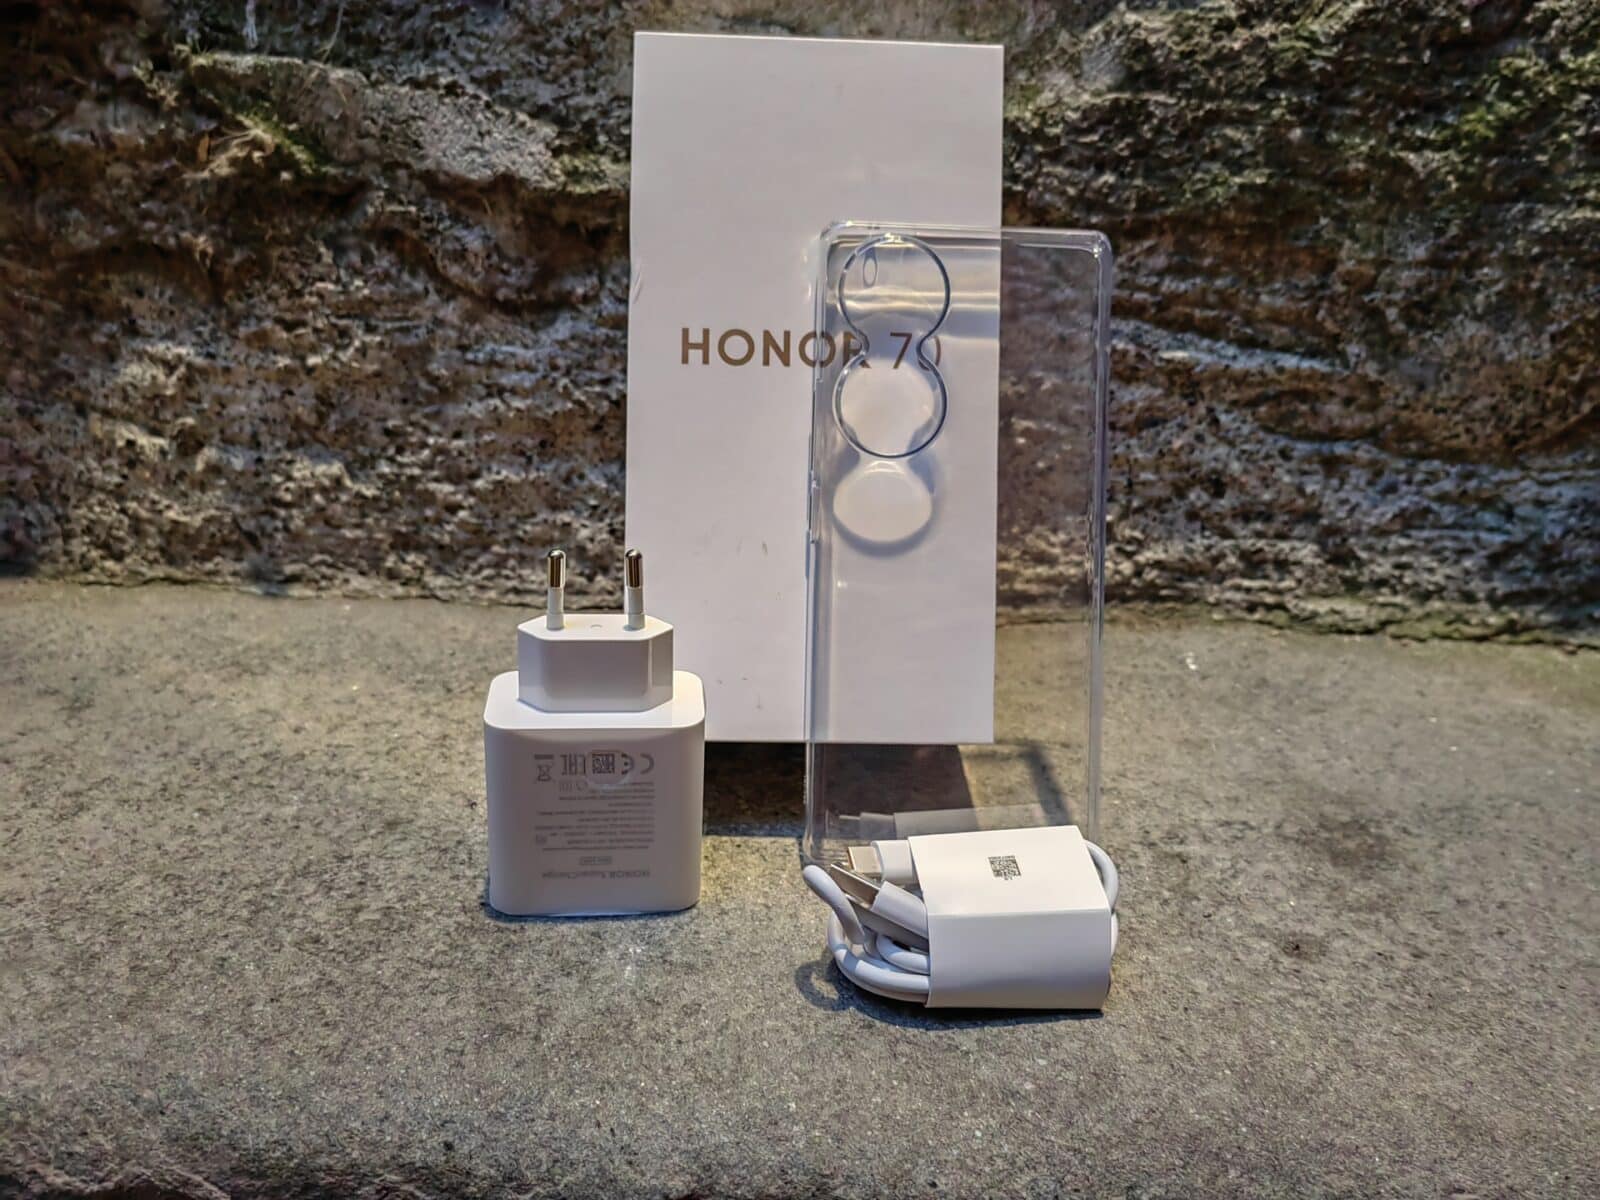 Test – Honor 70 : un smartphone endurant et performant Android